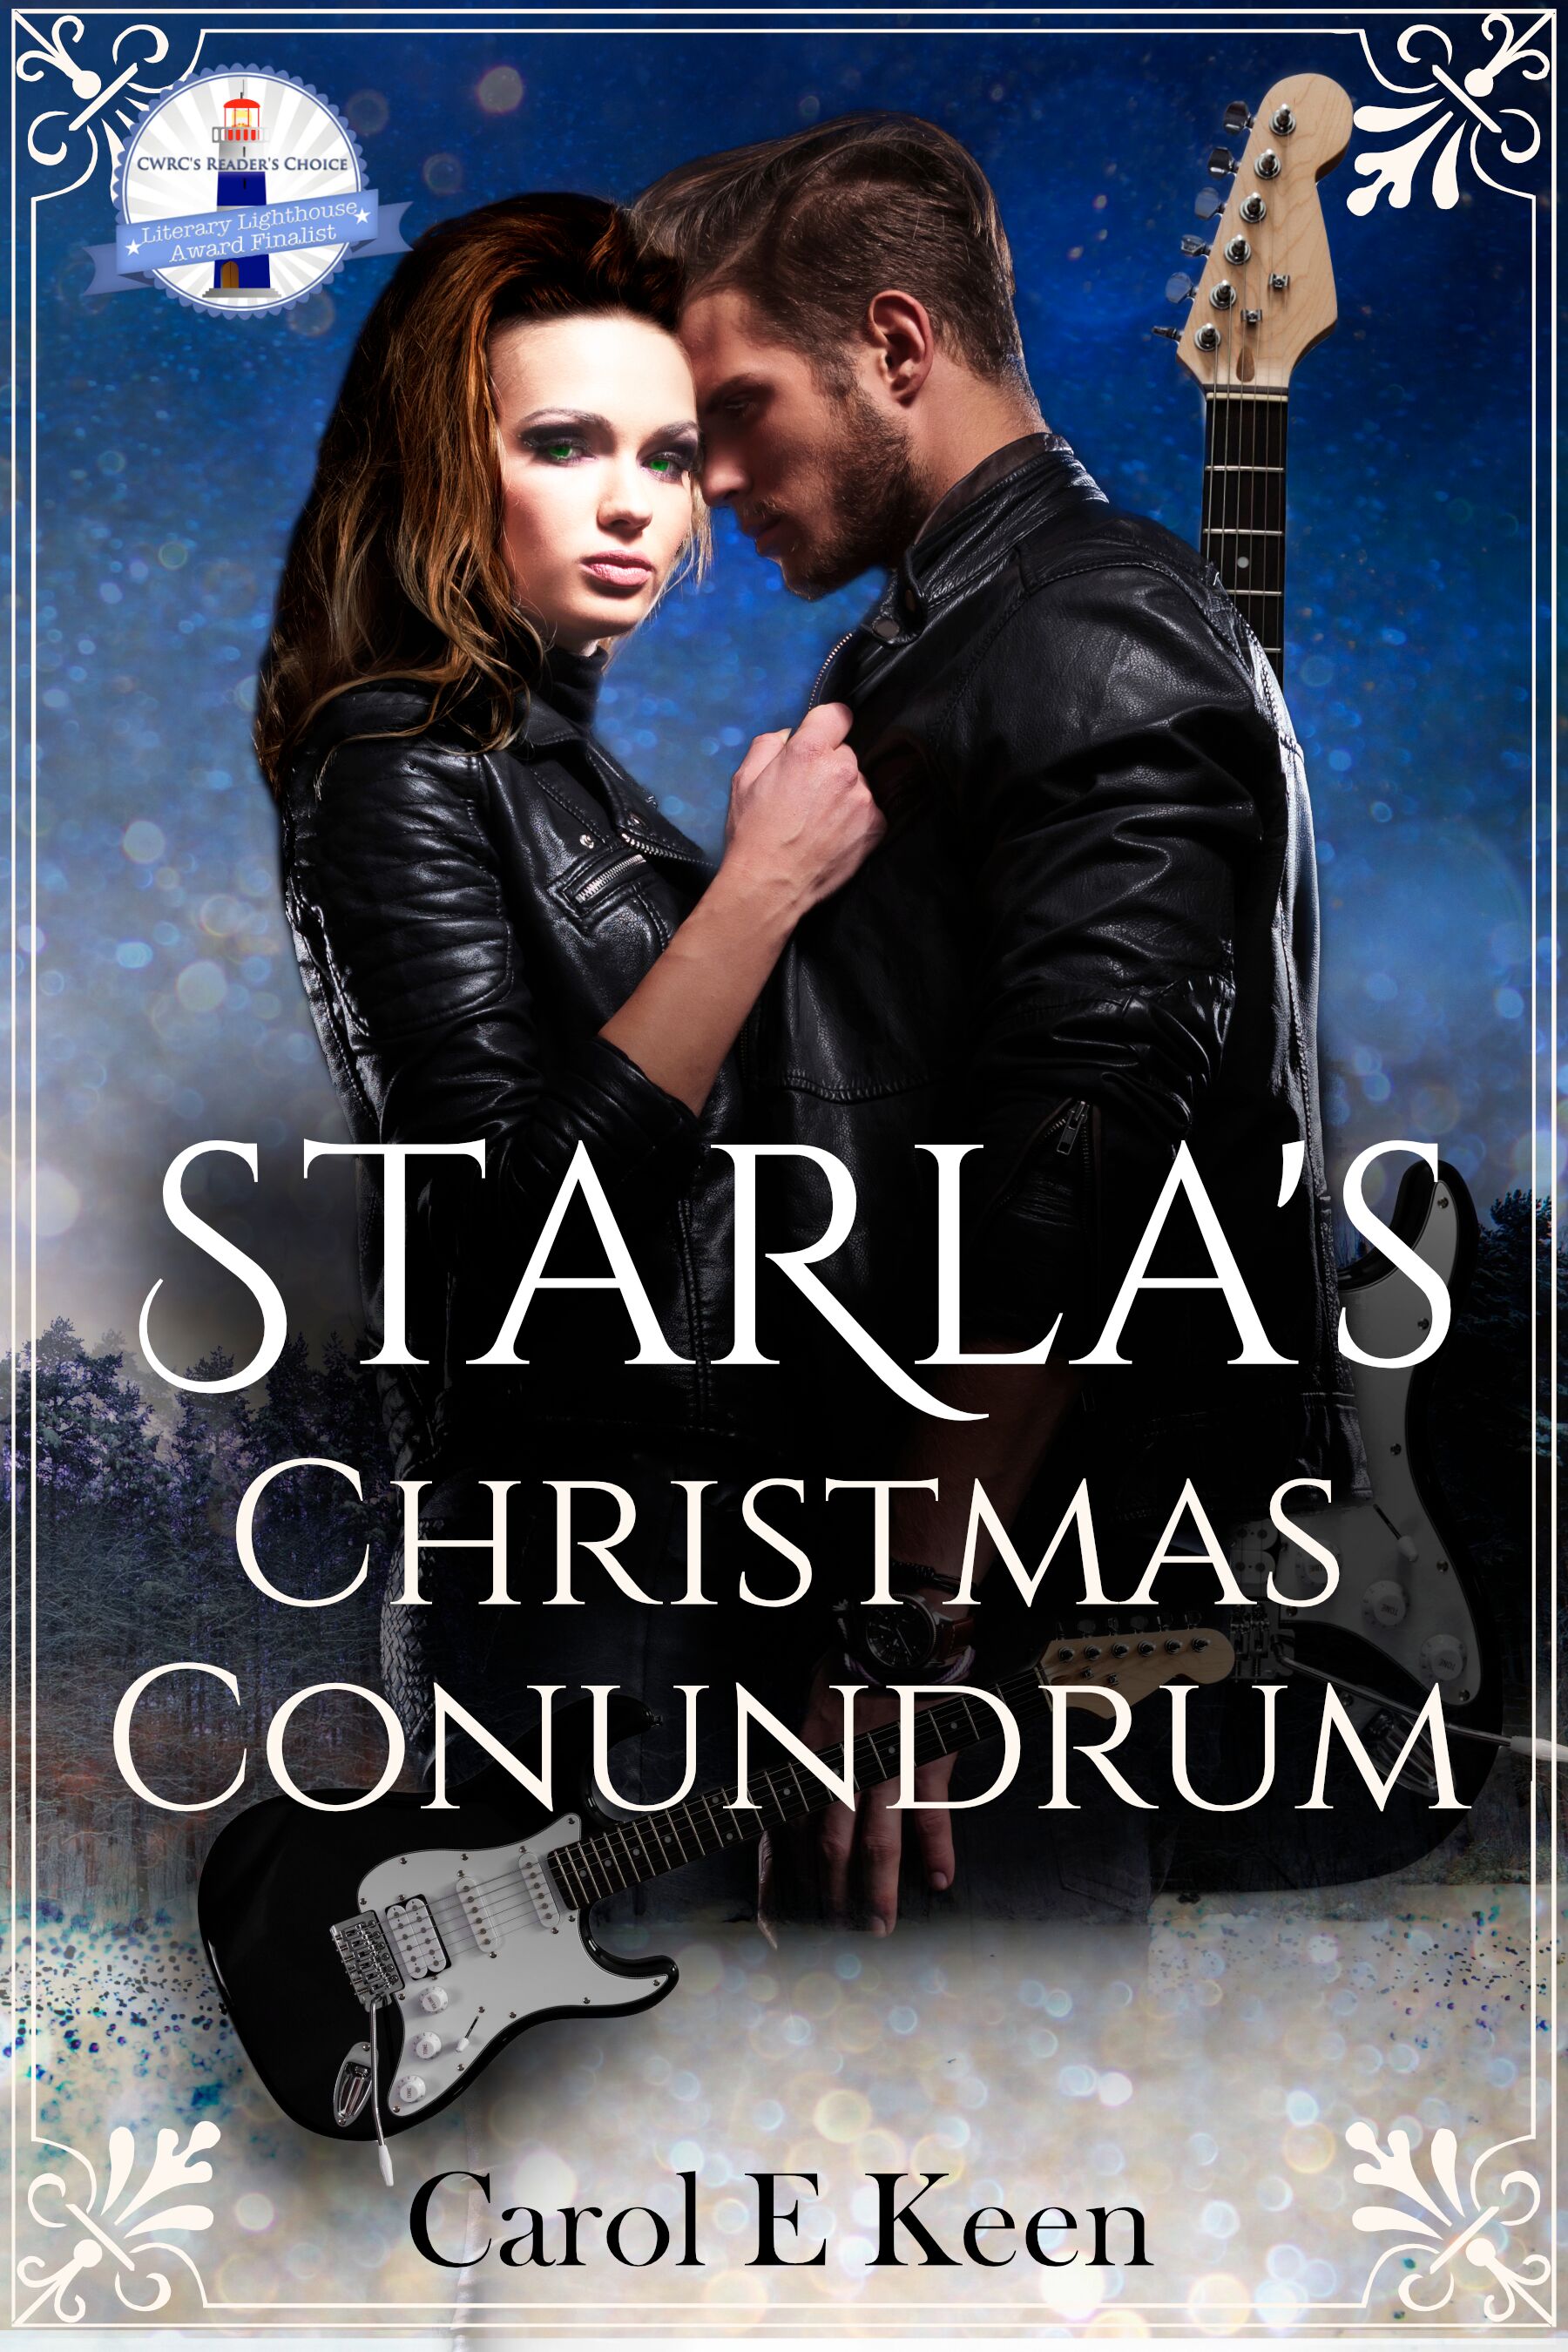 Starla's Christmas Conundrum